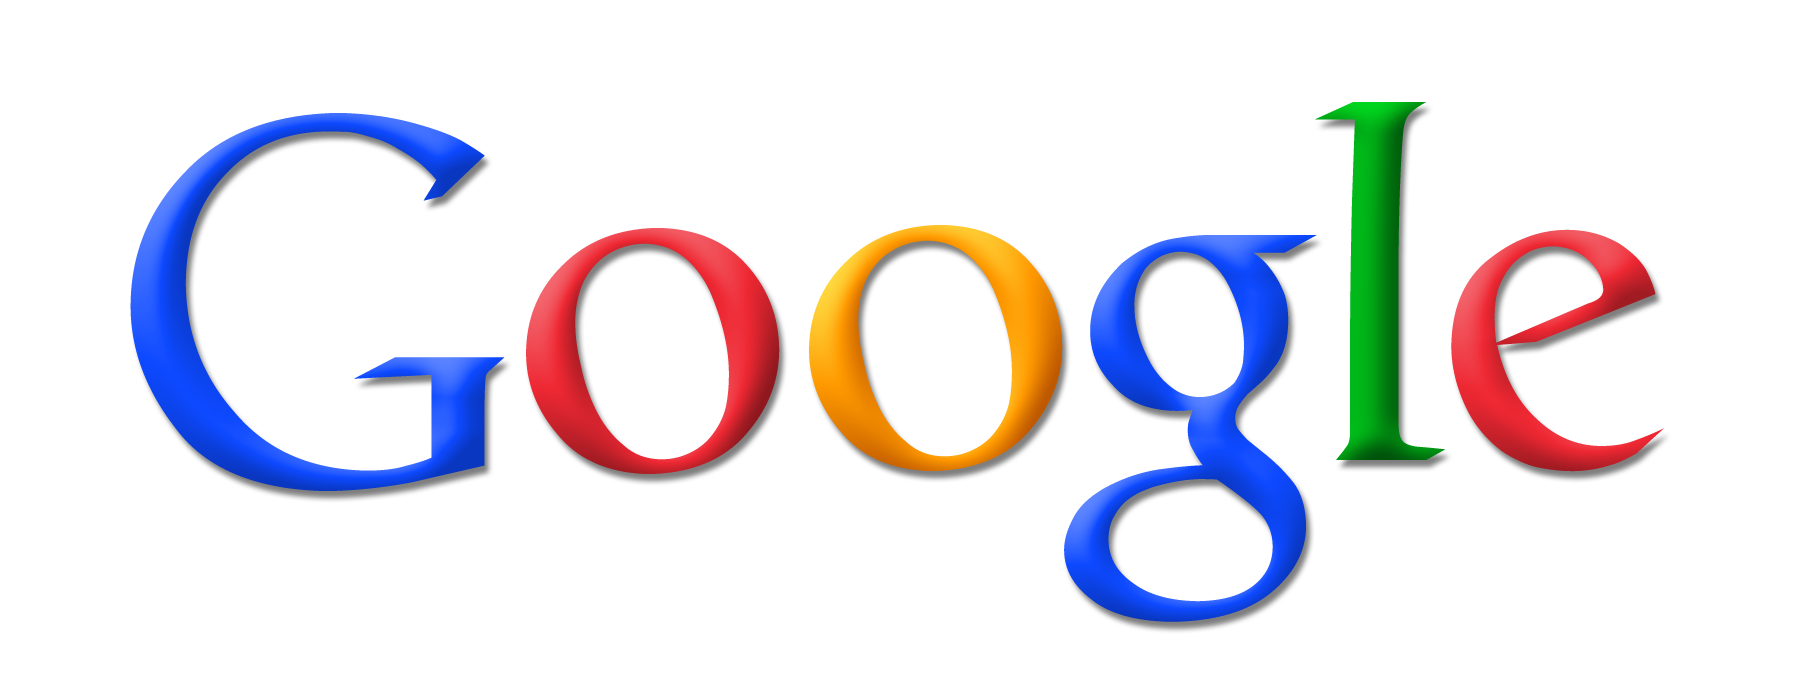 15 G Icon Transparent Images  G Google Logo Transparent